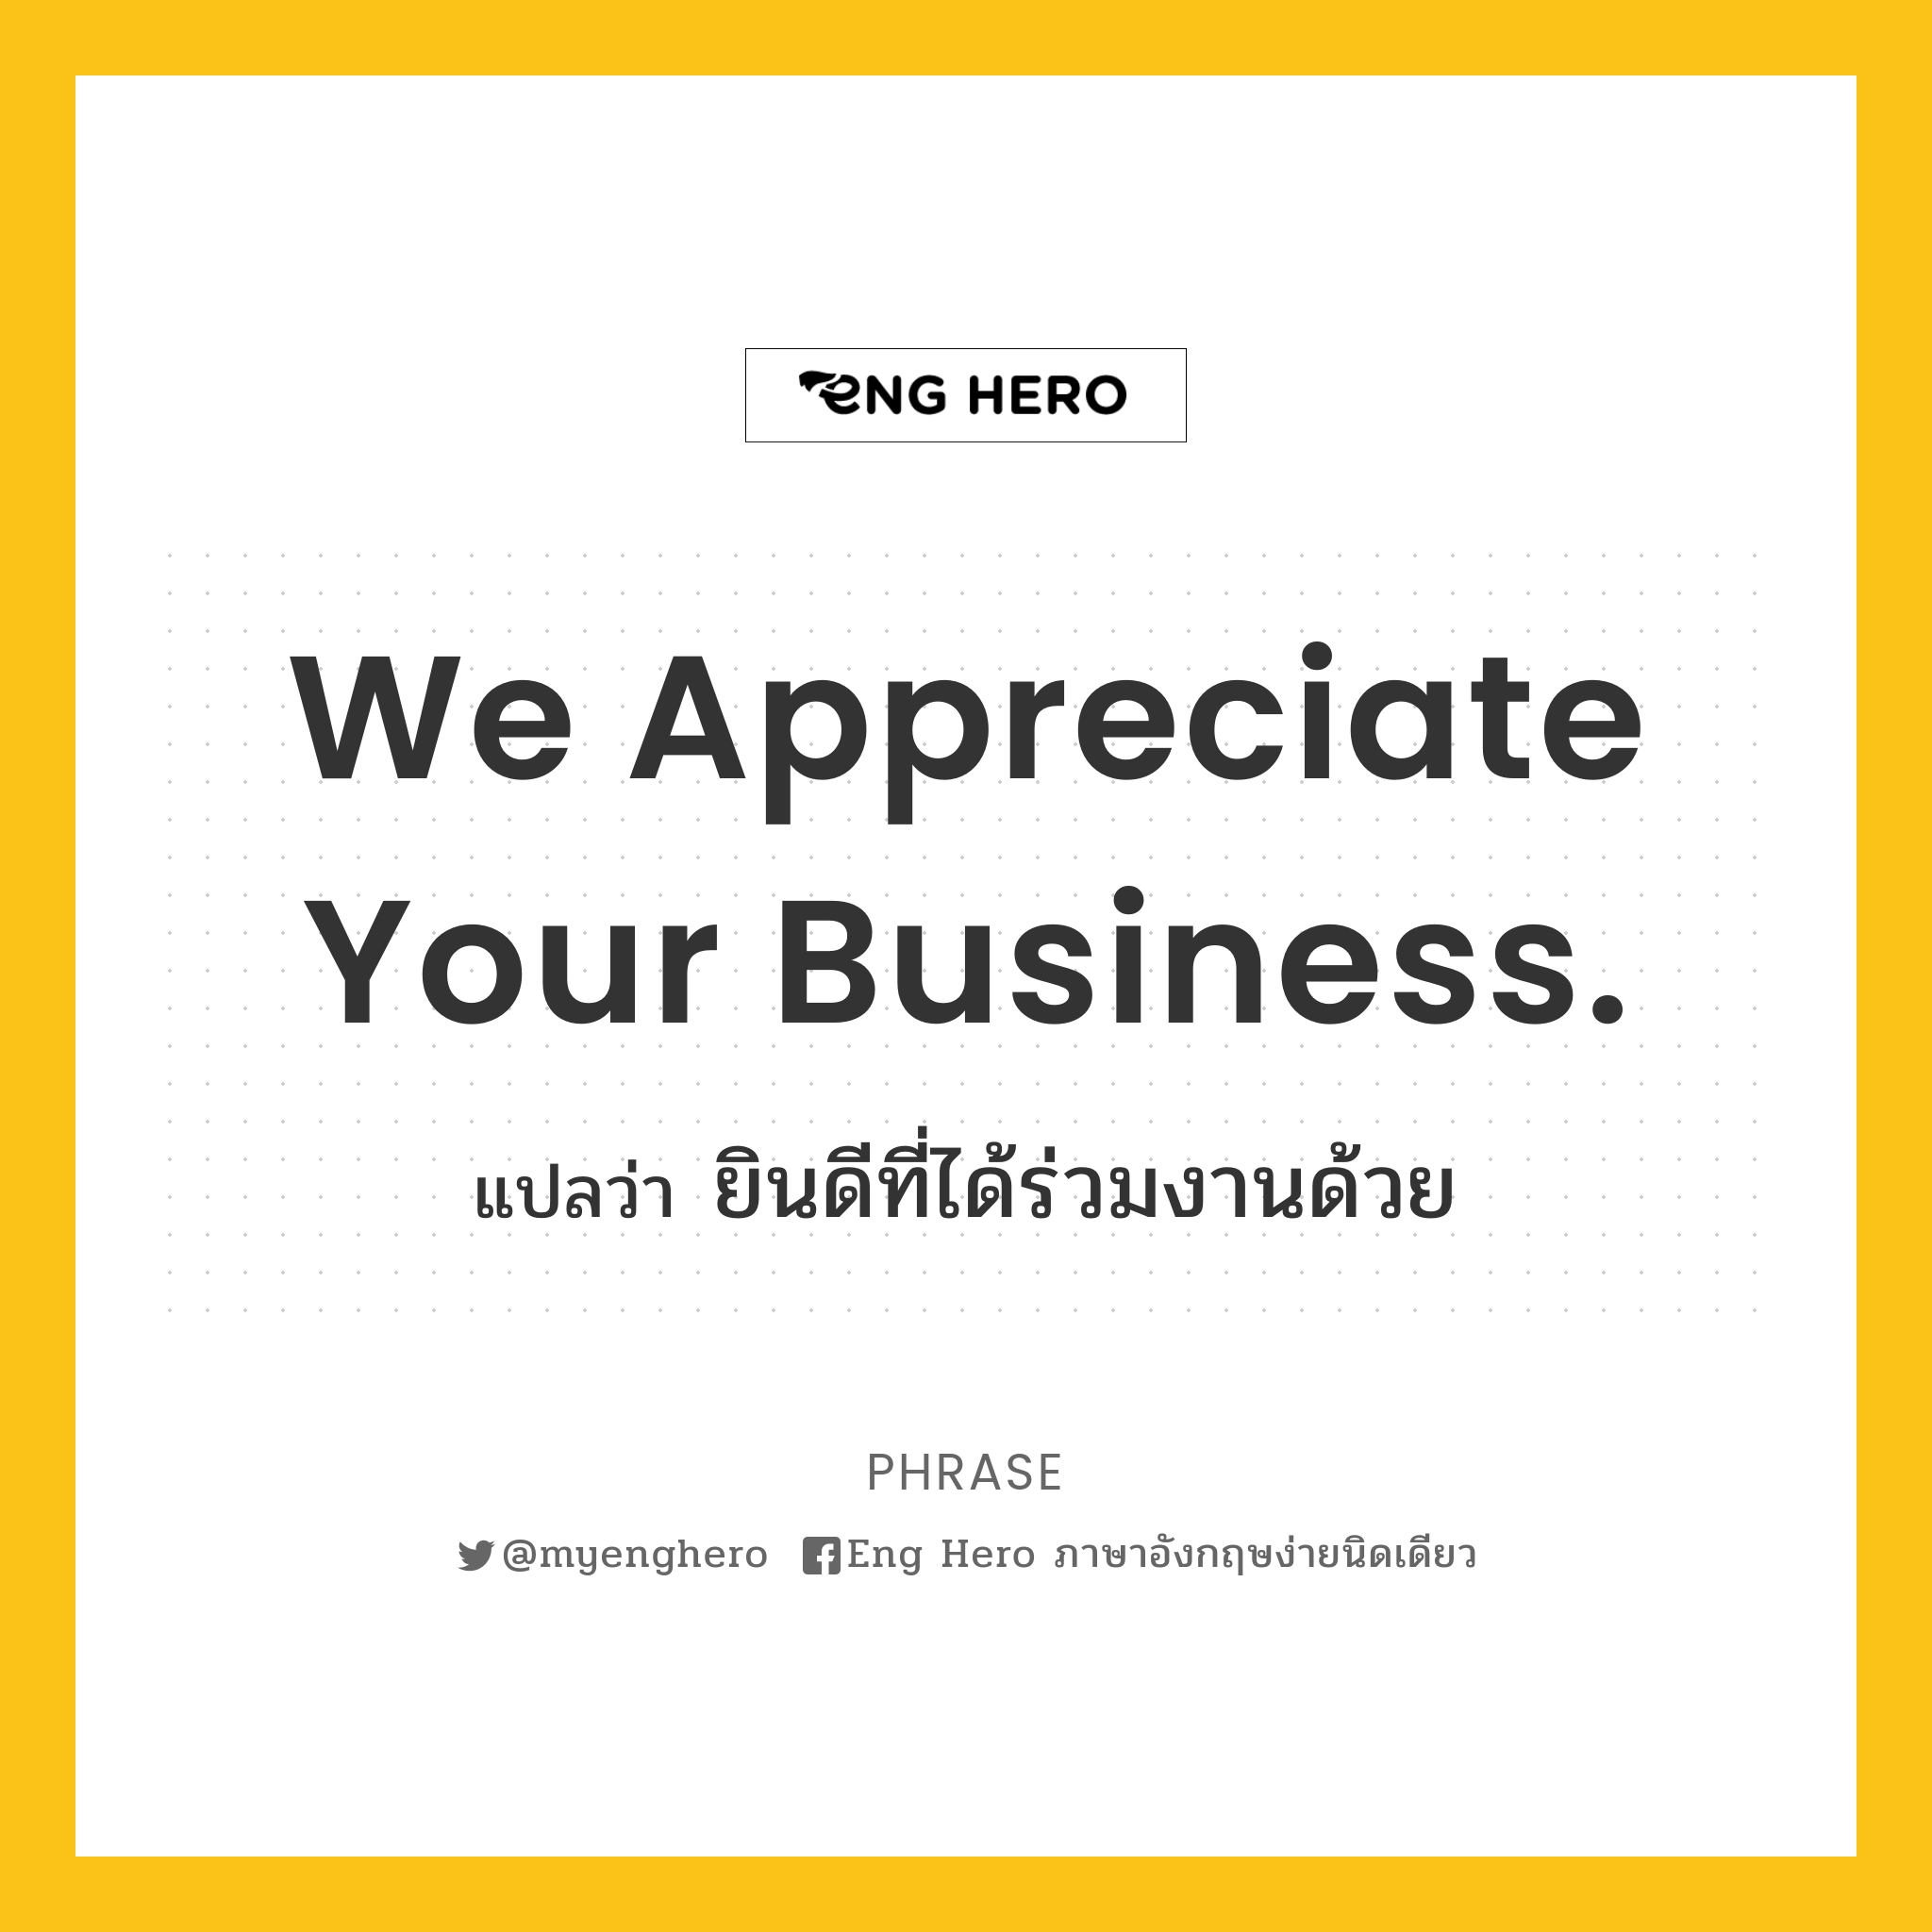 We appreciate your business.